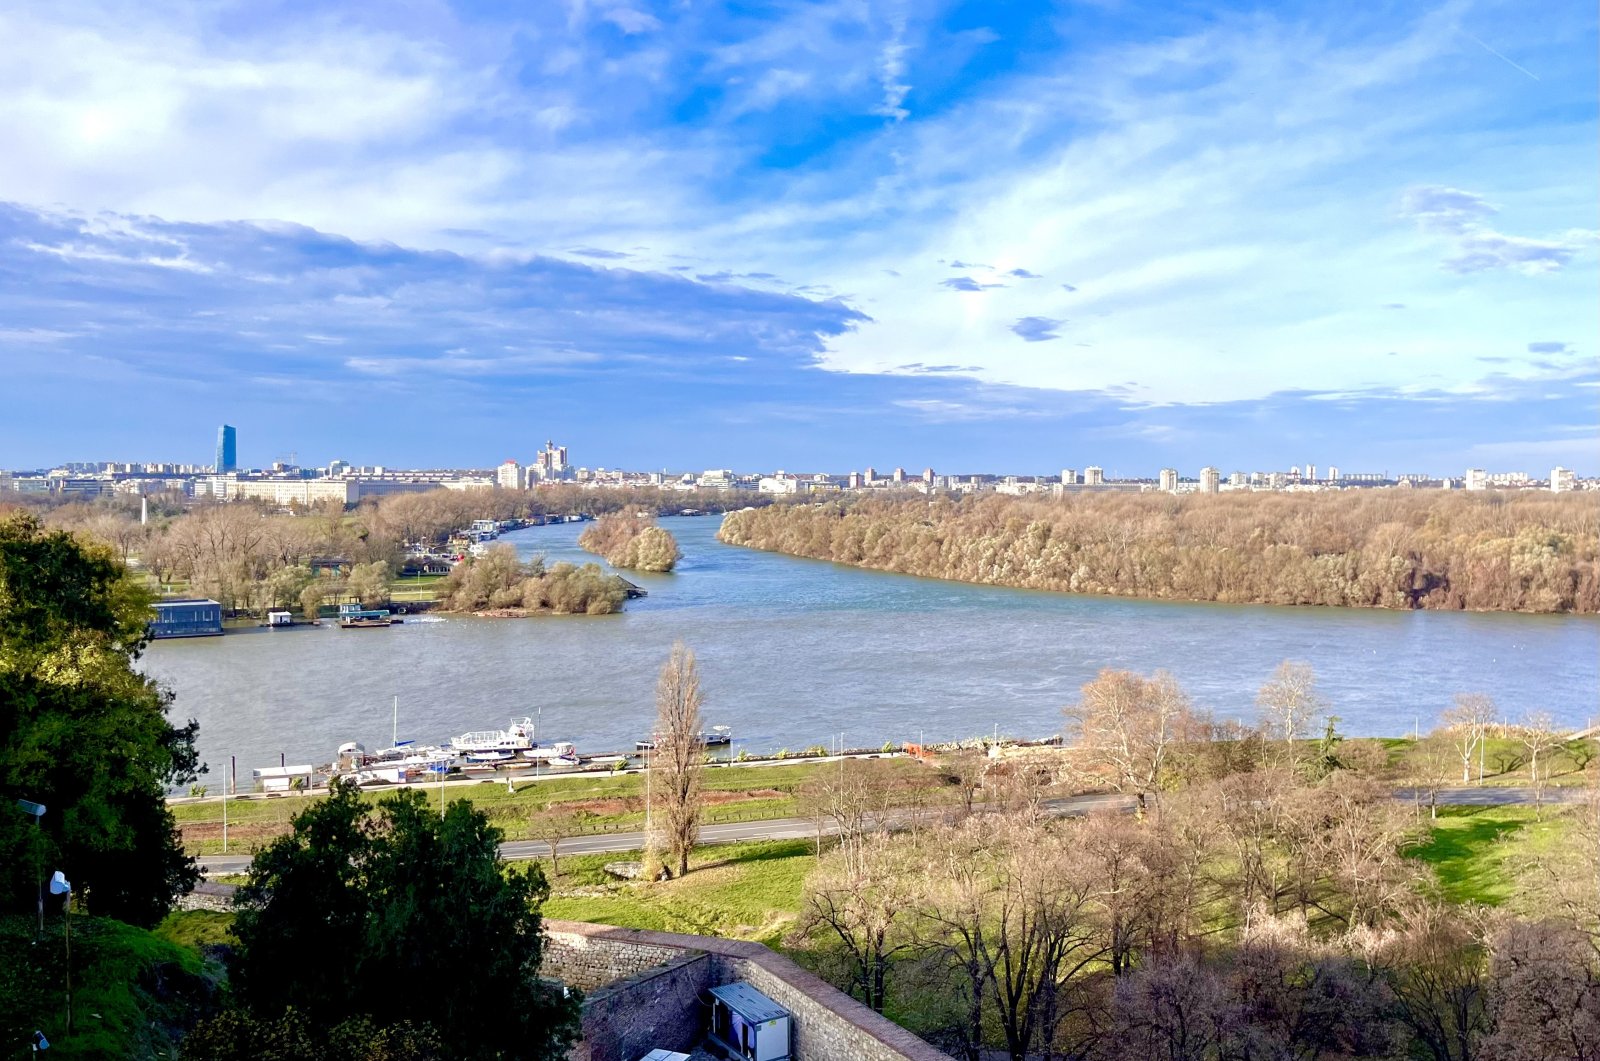 A view of Kalemegdan Park, Belgrade, Serbia. (Photo by Emre Başaran)